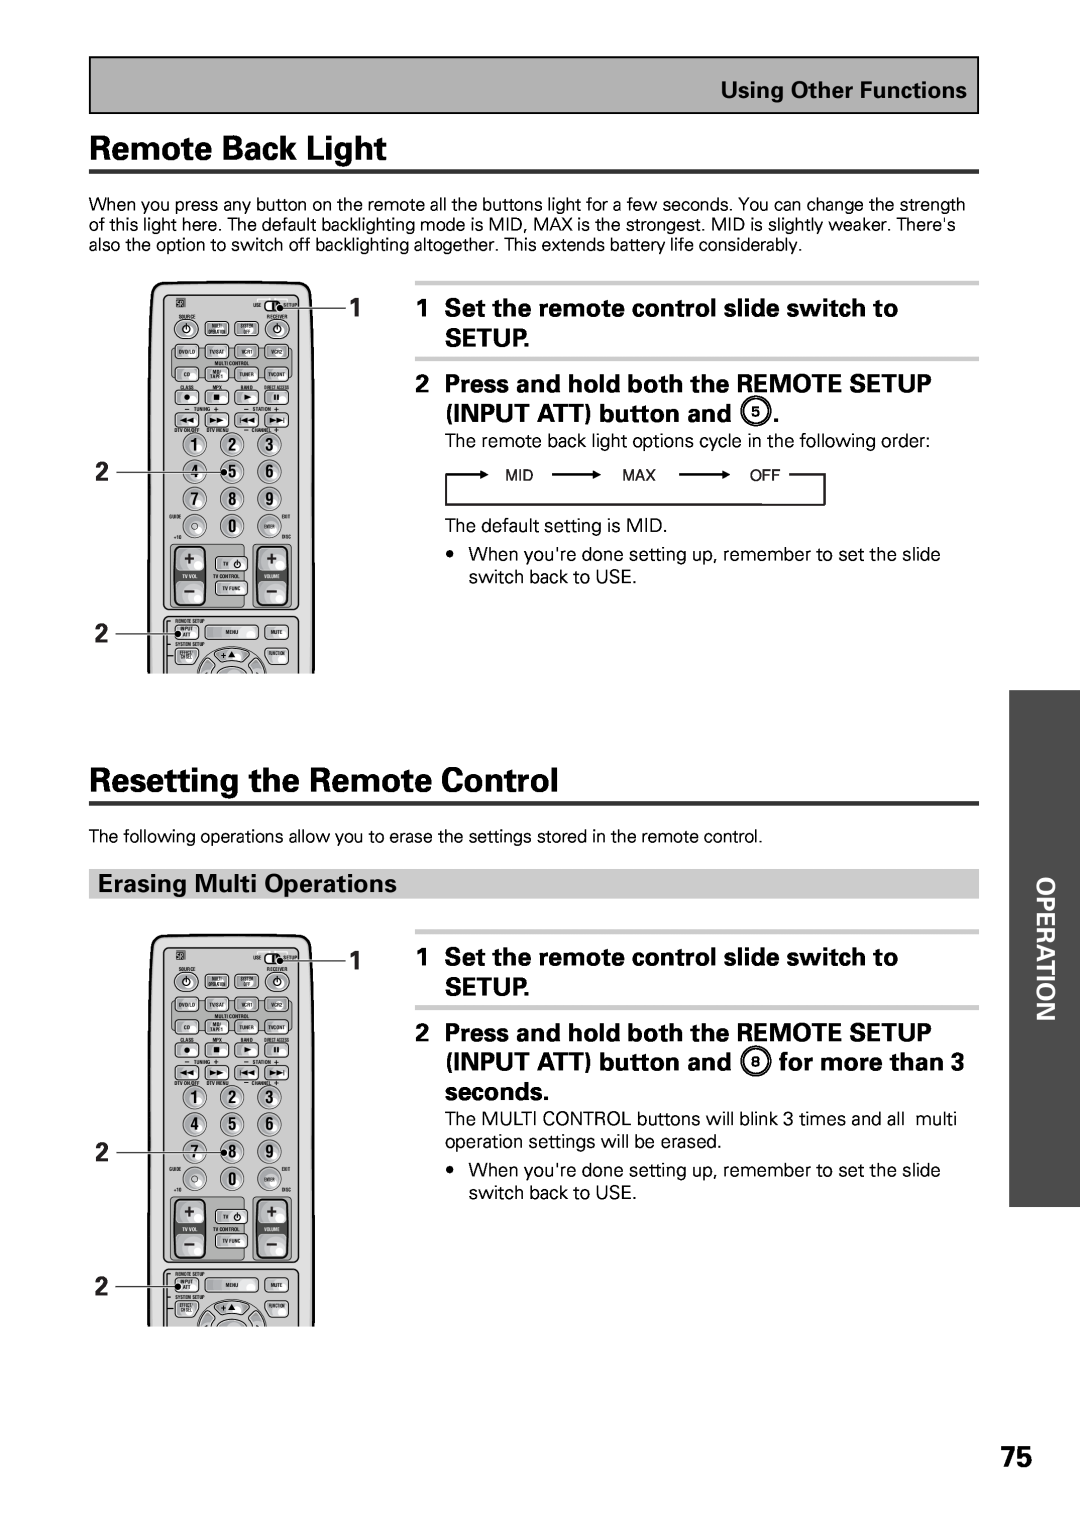 Pioneer VSX-37TX, VSX-36TX manual Remote Back Light, Resetting the Remote Control, Erasing Multi Operations, seconds, Setup 